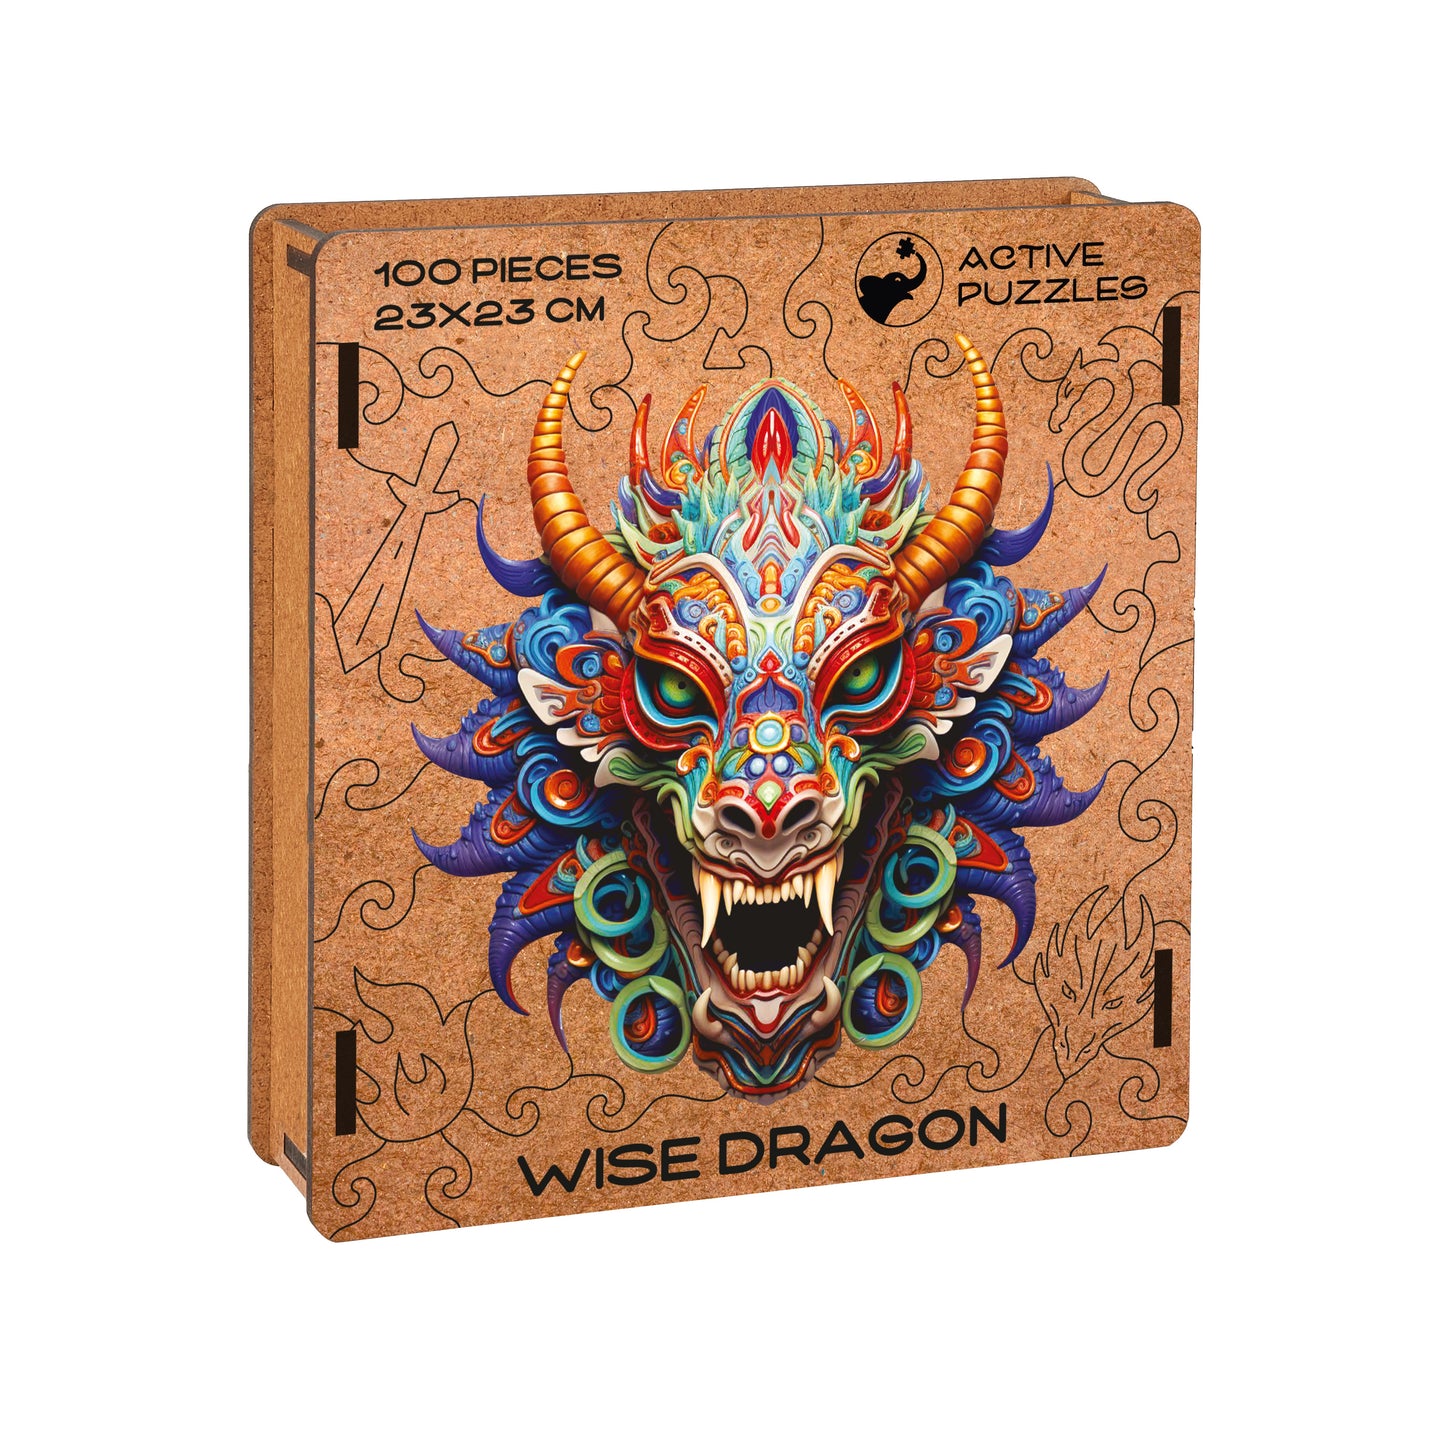 Wise Dragon Wooden Puzzle | Myth Gods Decor Active Puzzles